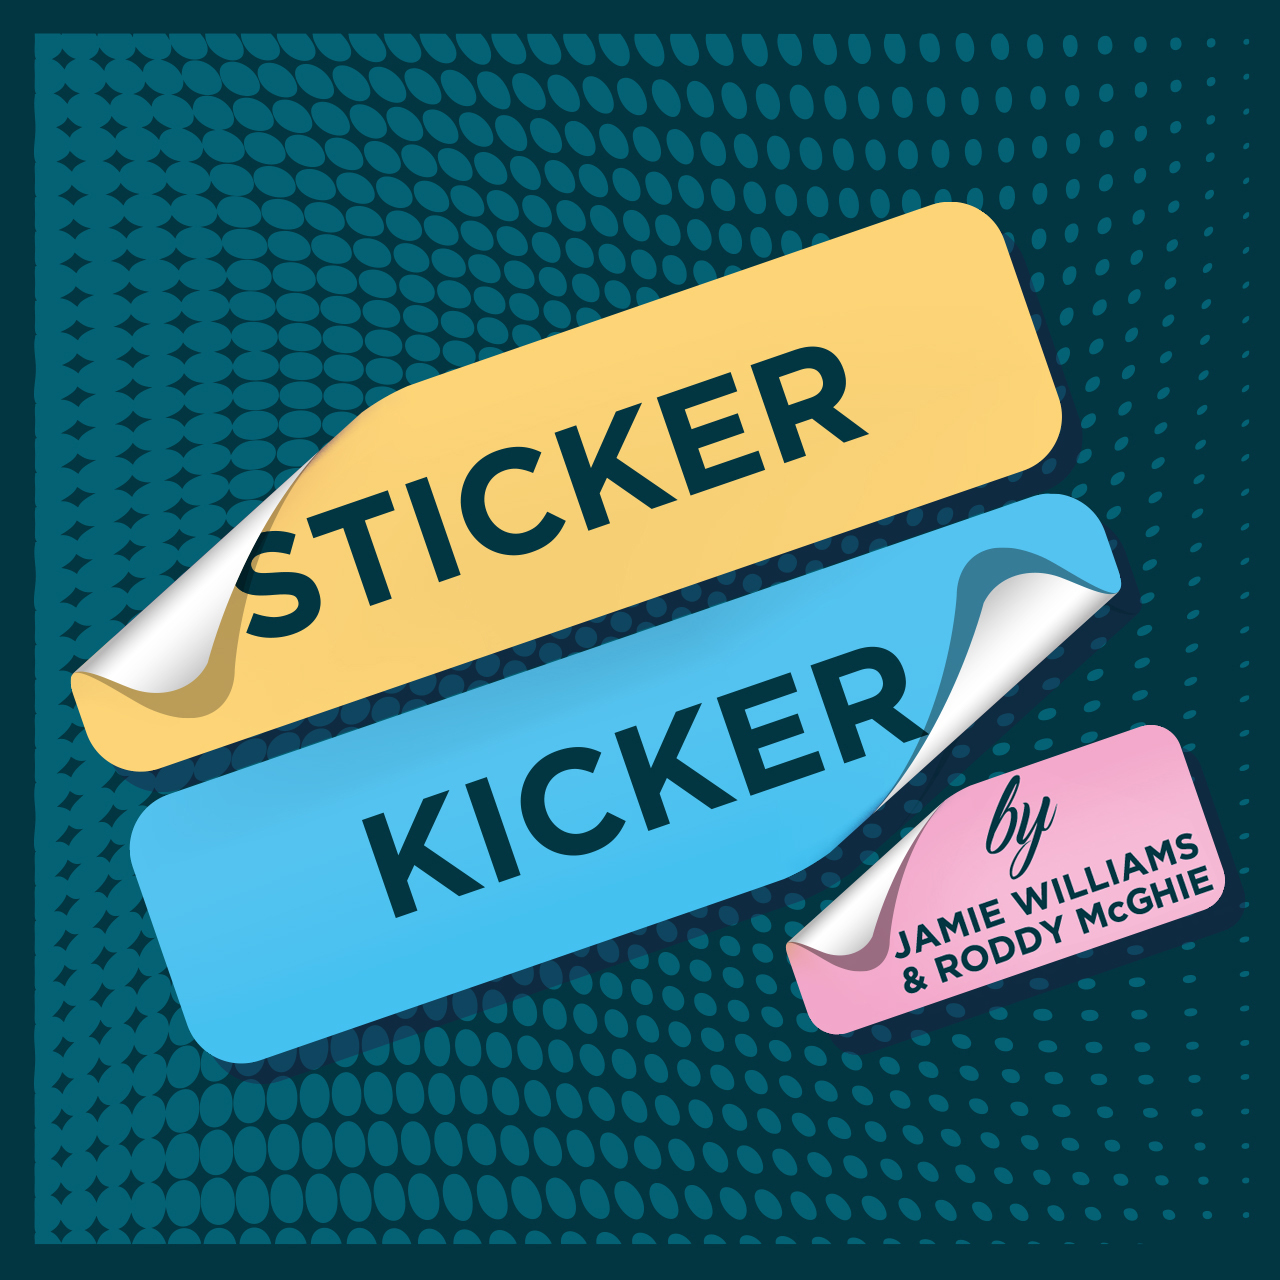 Sticker-Kicker-by-Jamie-Williams-&-Roddy-McGhie